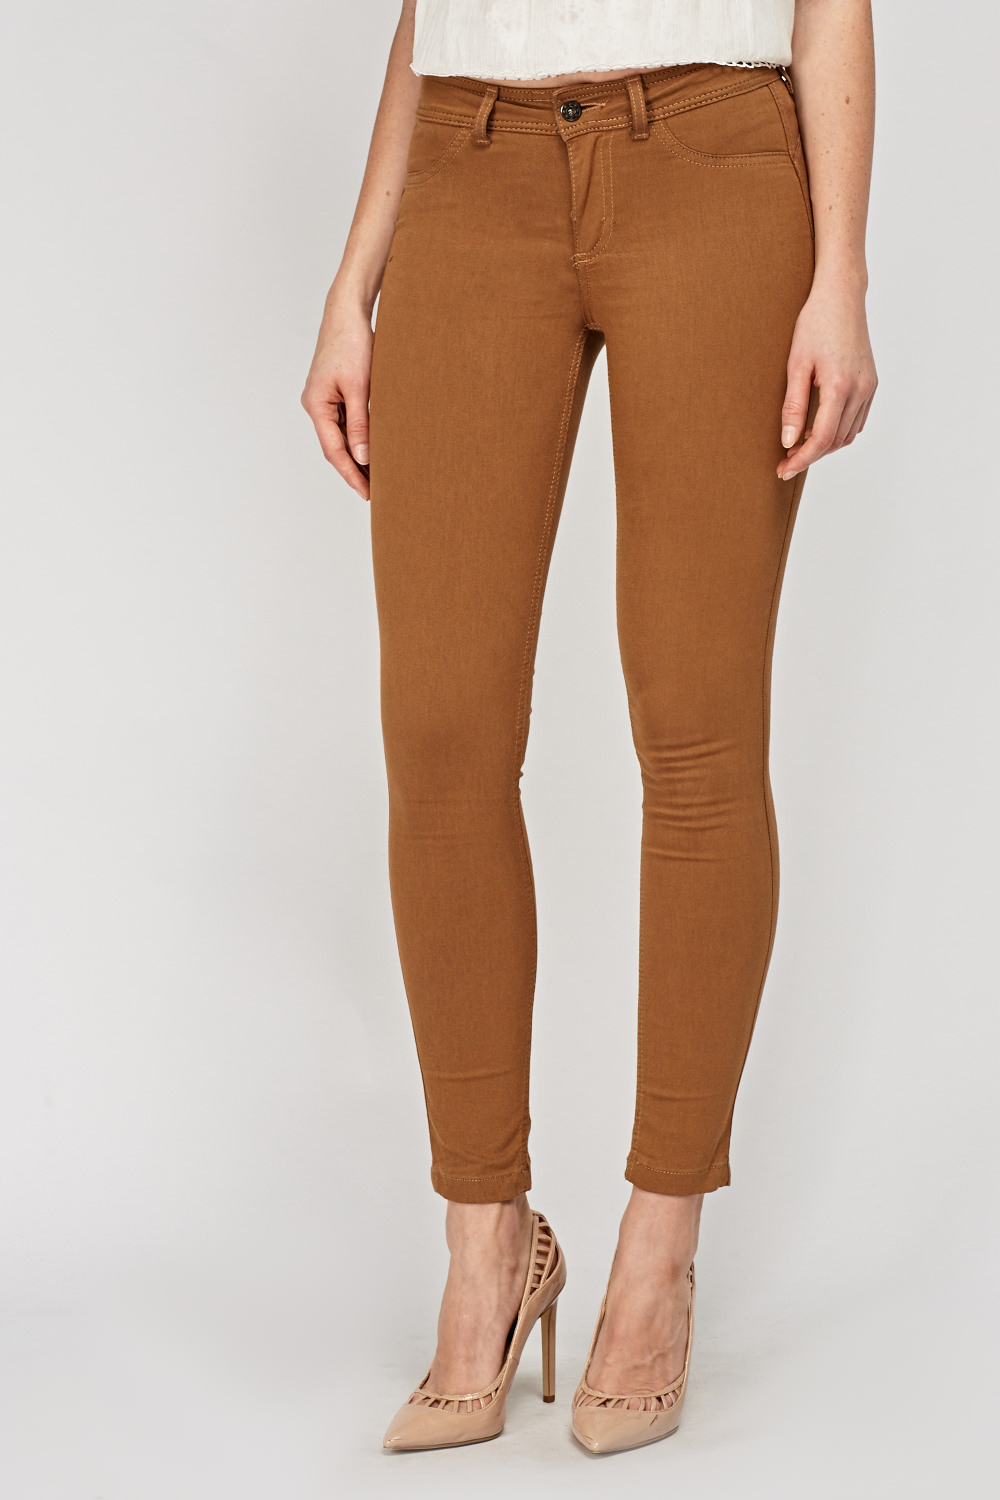 Slim Fit Camel Jeans - Just $3